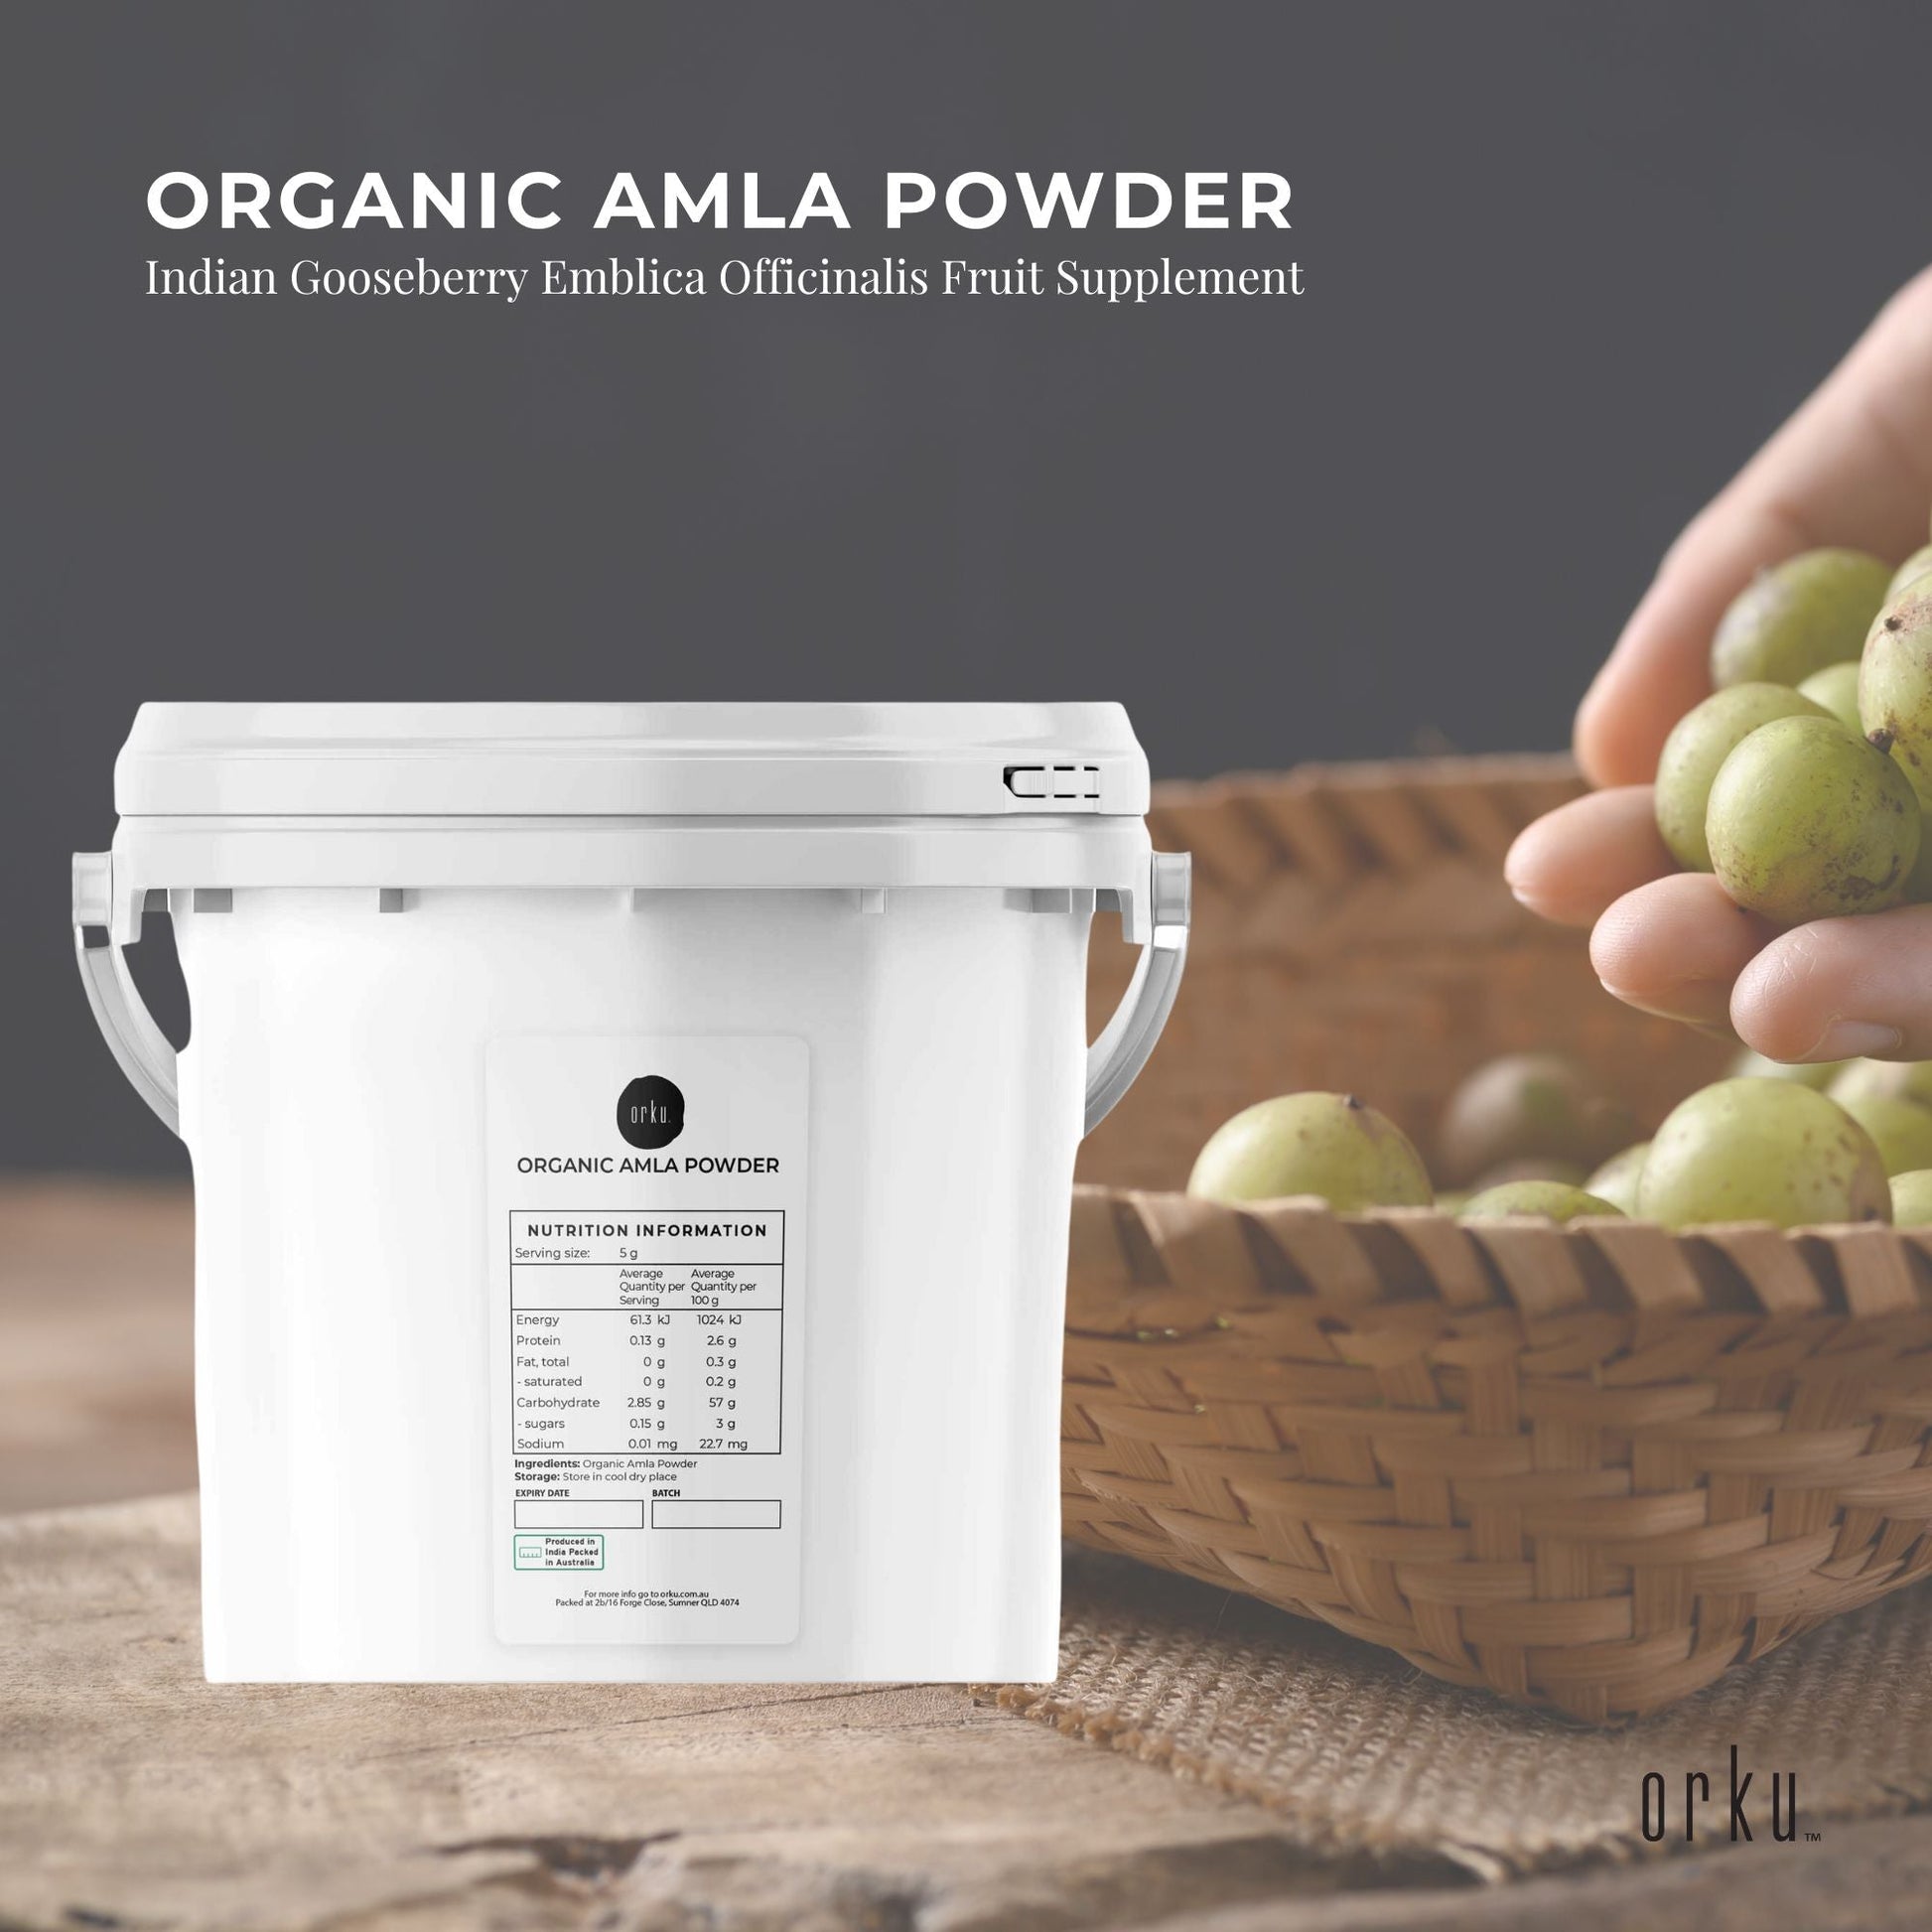 Organic Amla Powder Tub Indian Gooseberry Emblica Officinalis Fruit Supplement